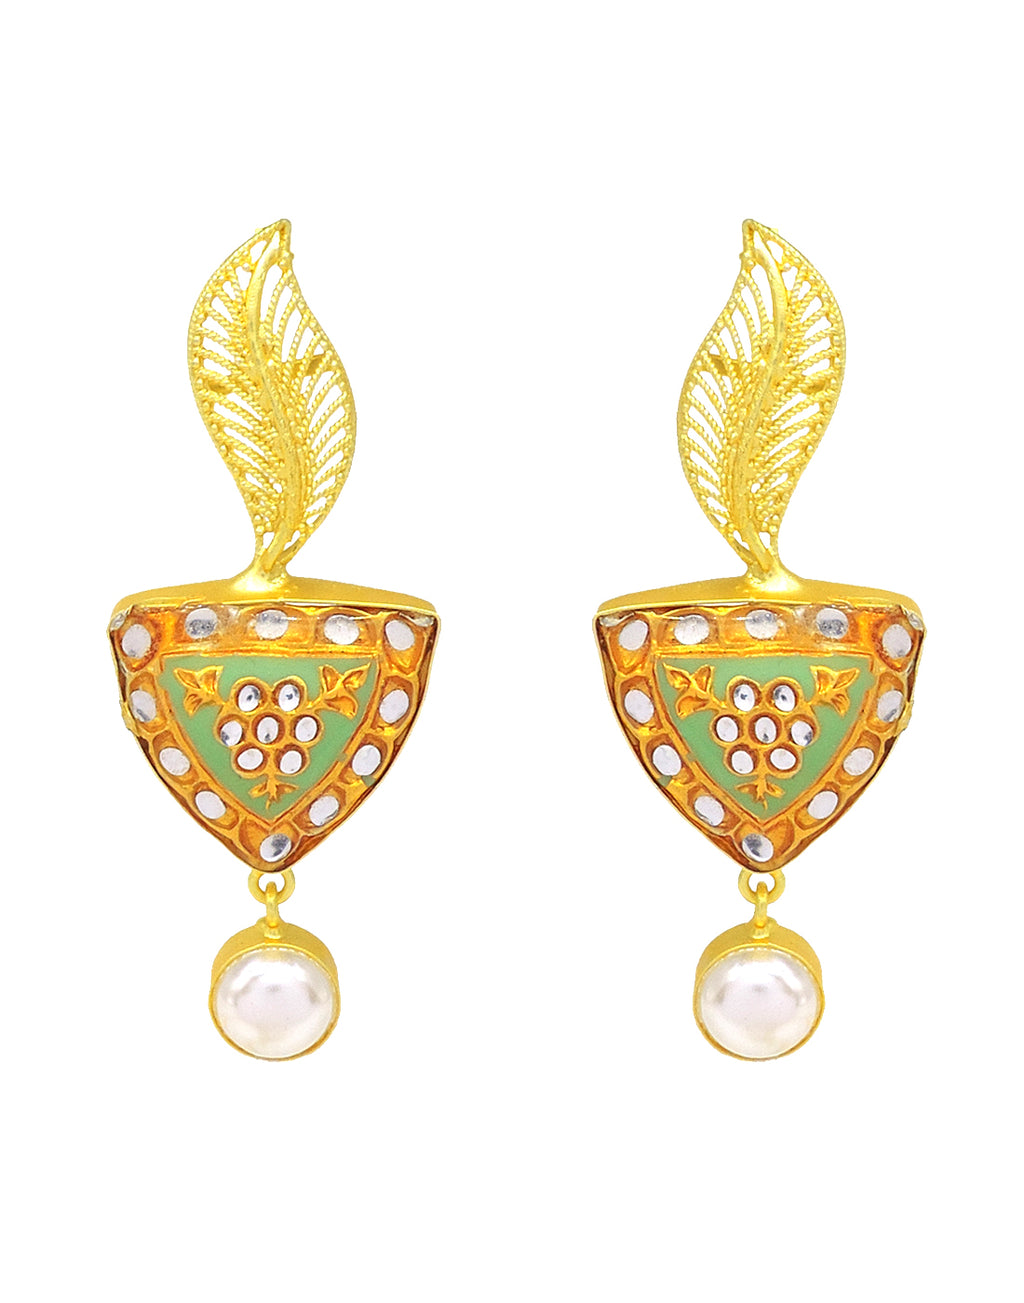 Kundan Triangle Earrings - Statement Earrings - Gold-Plated & Hypoallergenic Jewellery - Made in India - Dubai Jewellery - Dori